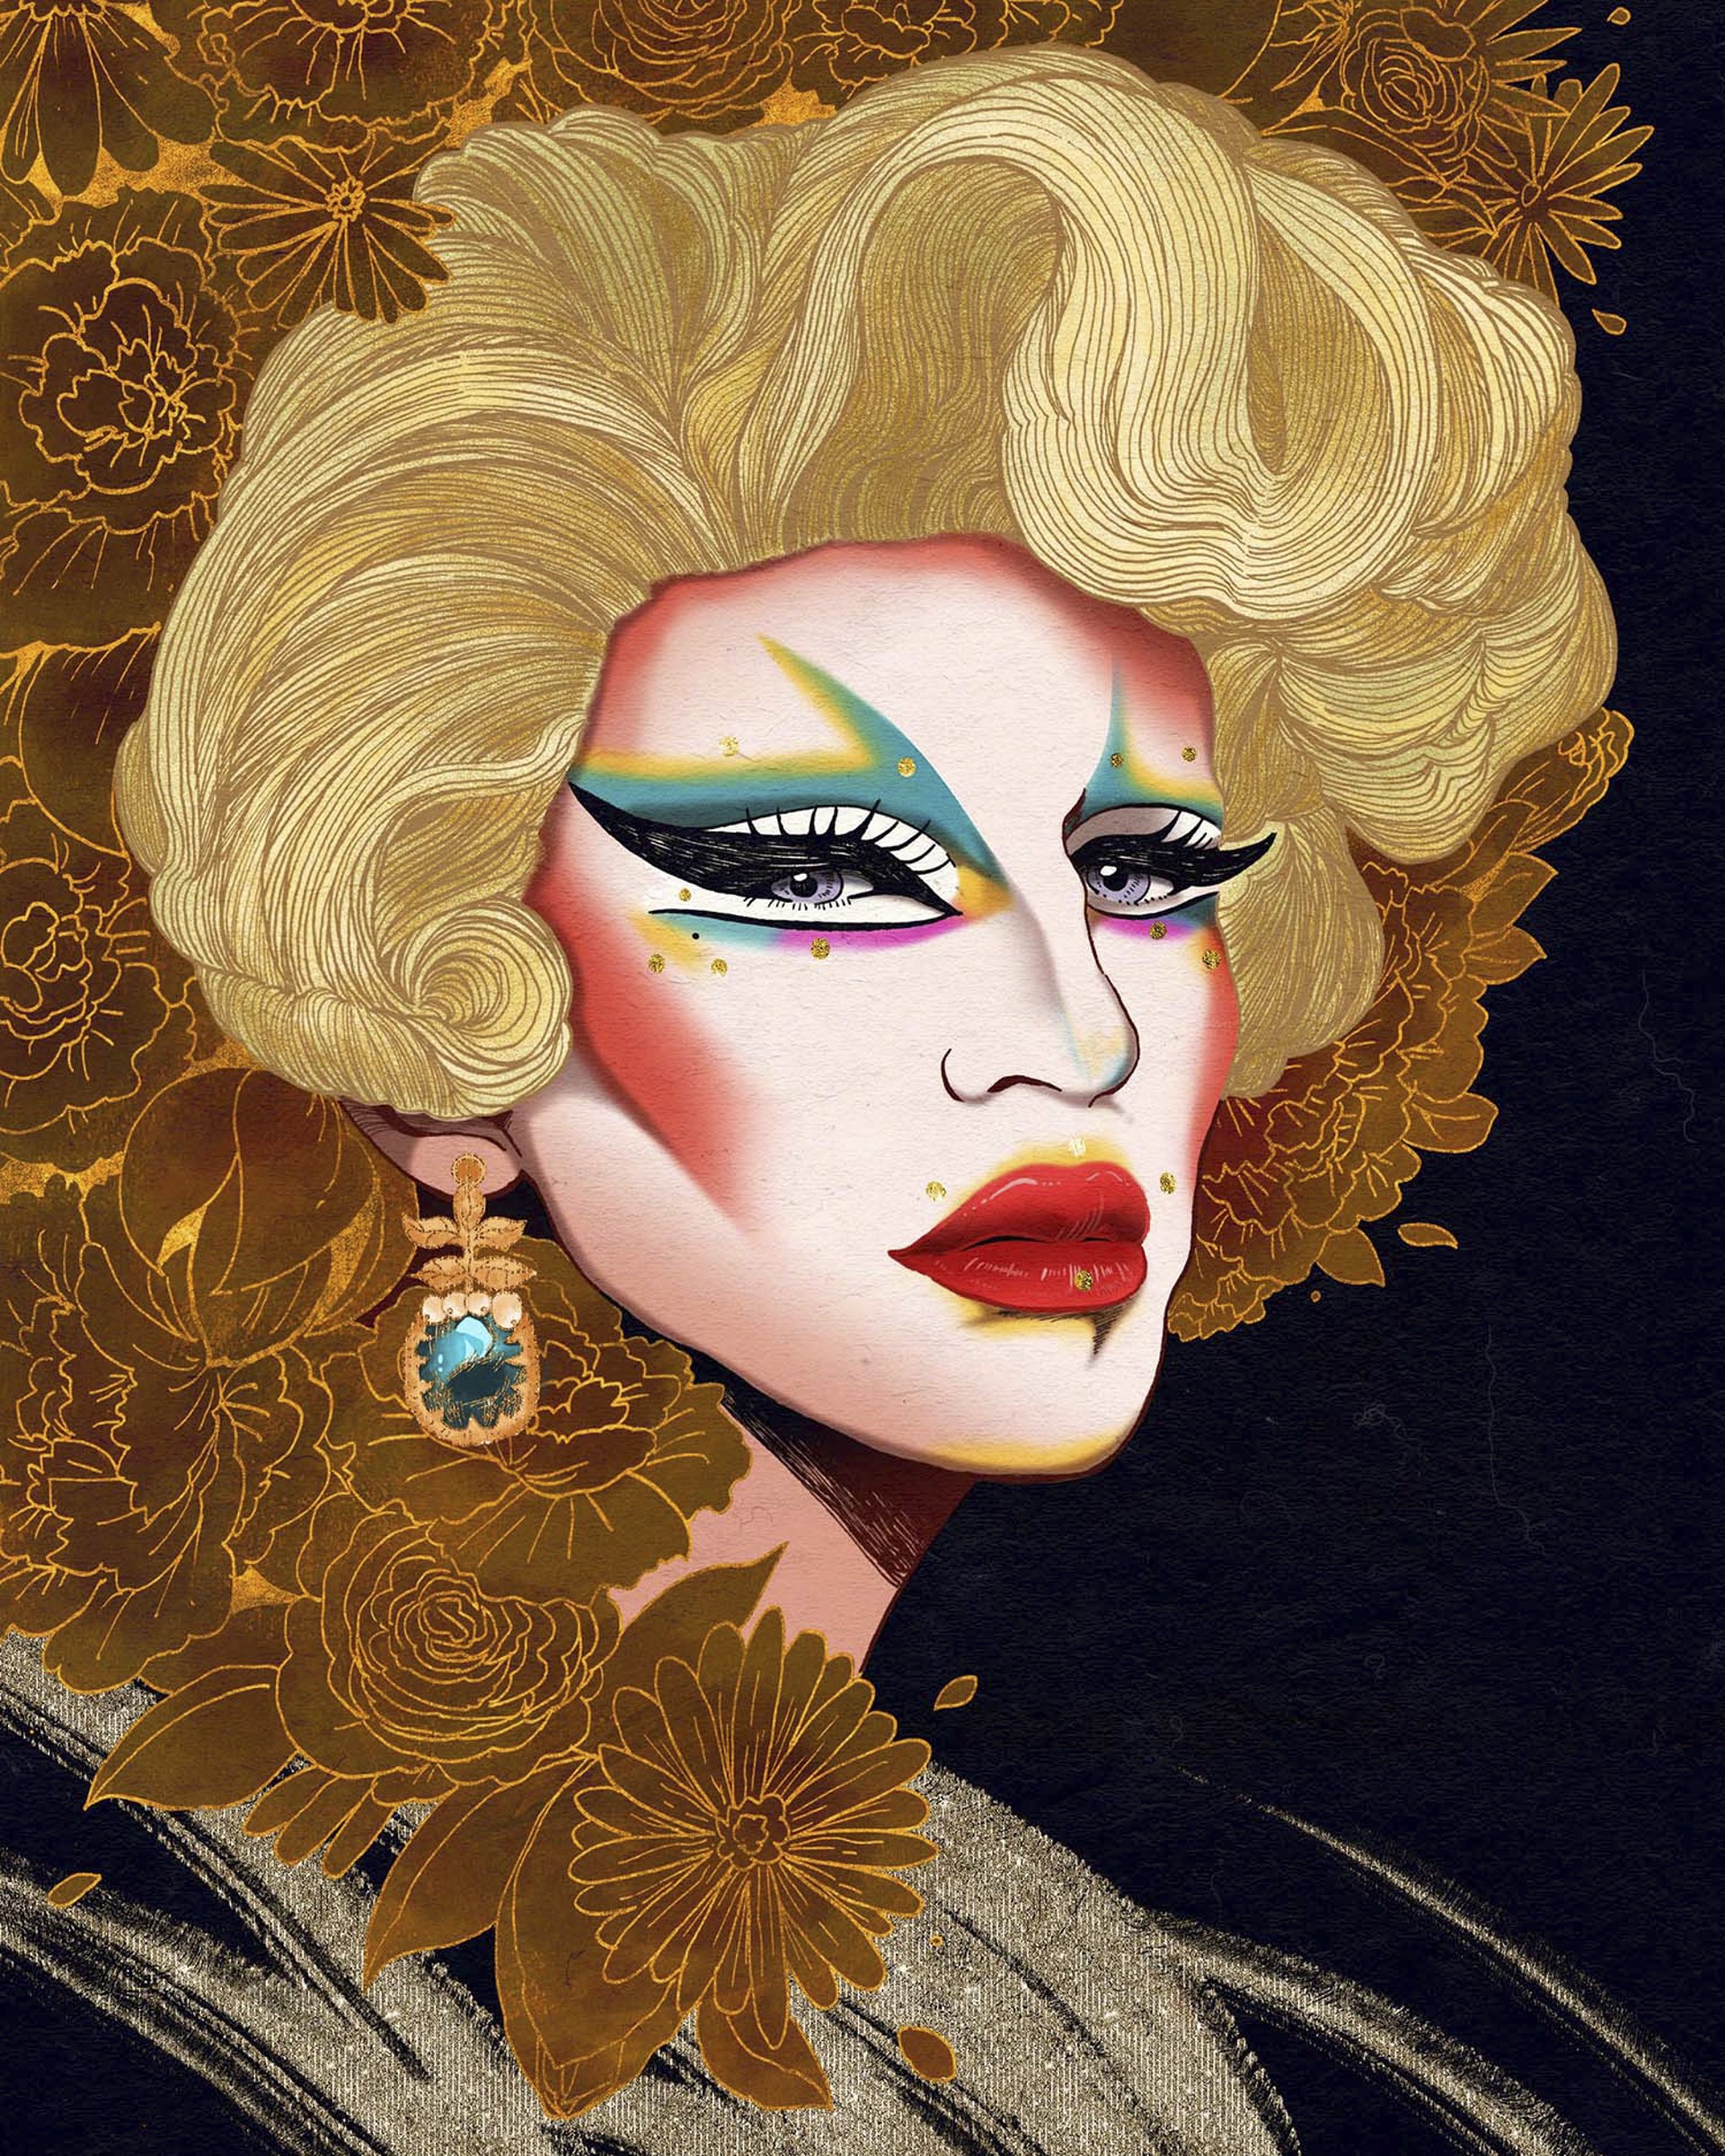 Drag Queen Portrait Series - Aquaria - by Yidan Niu